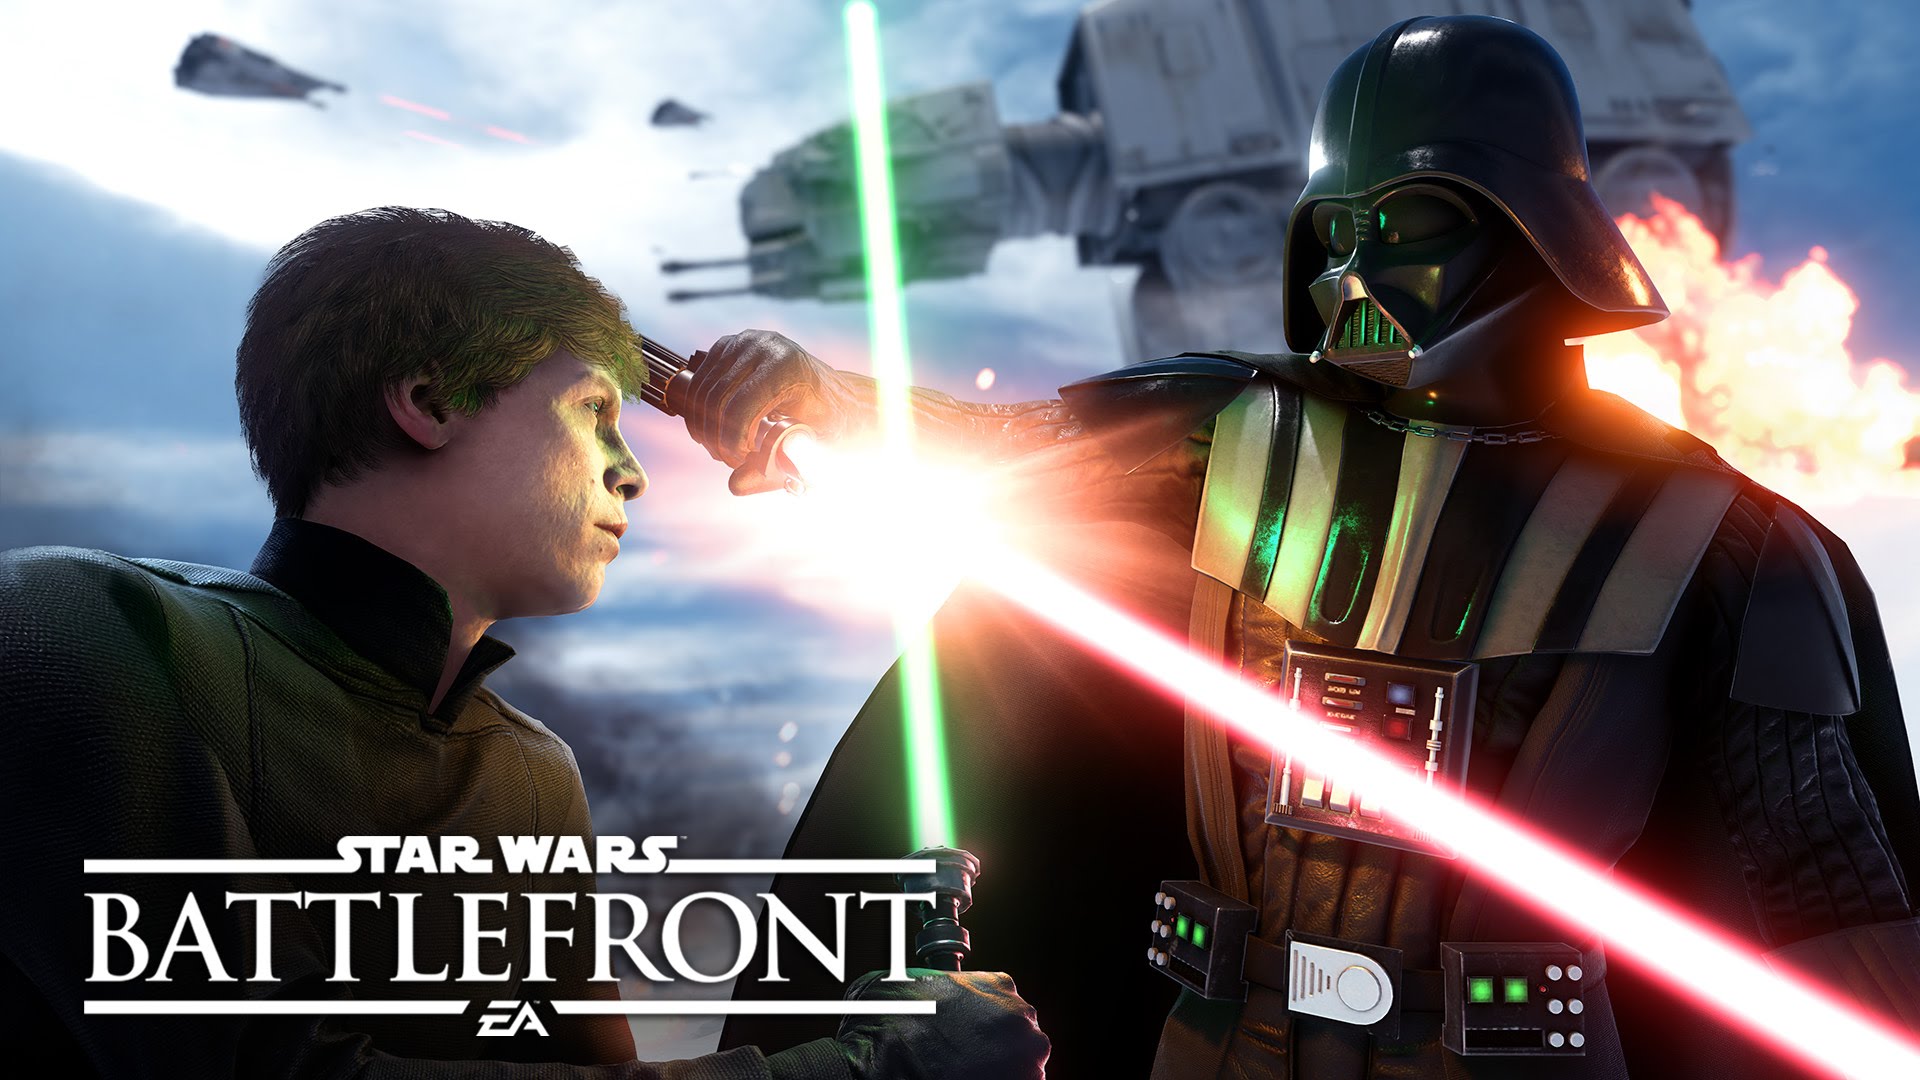 Star Wars Battlefront: Multiplayer Gameplay | E3 2015 “Walker Assault” on Hoth